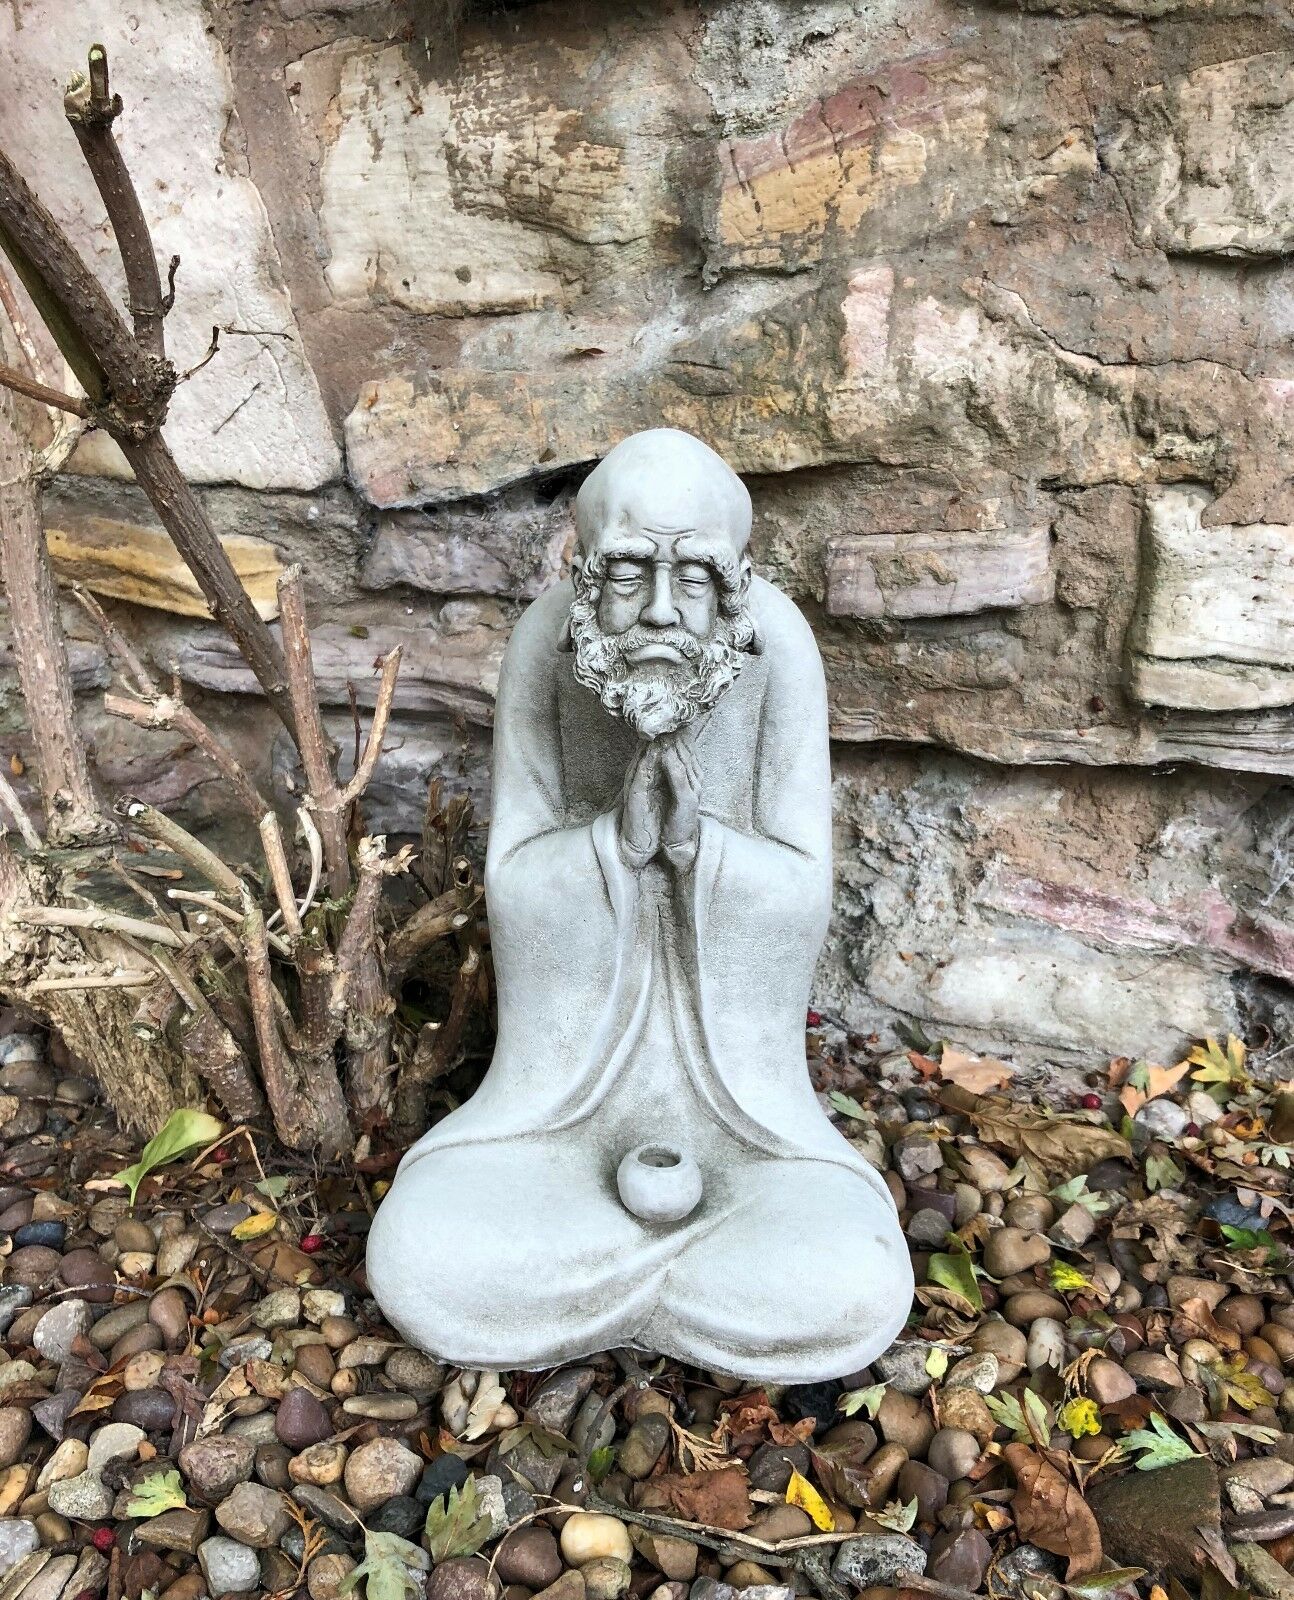 Stunning Stone Praying Old Monk Sculpture Garden Ornament